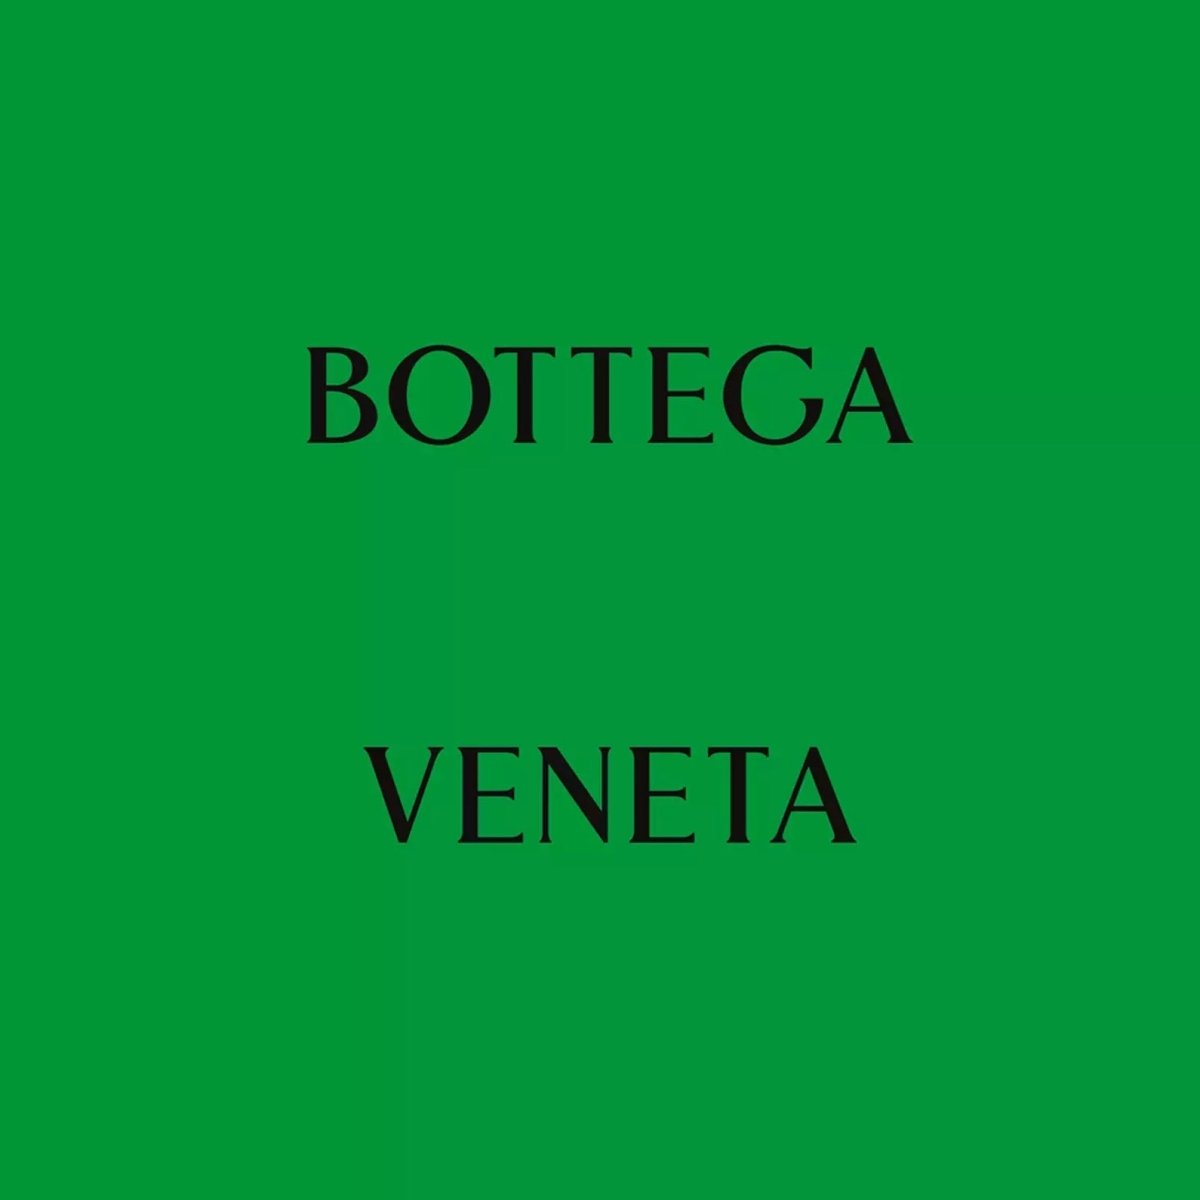 Bottega Veneta - La Familia Street Culture